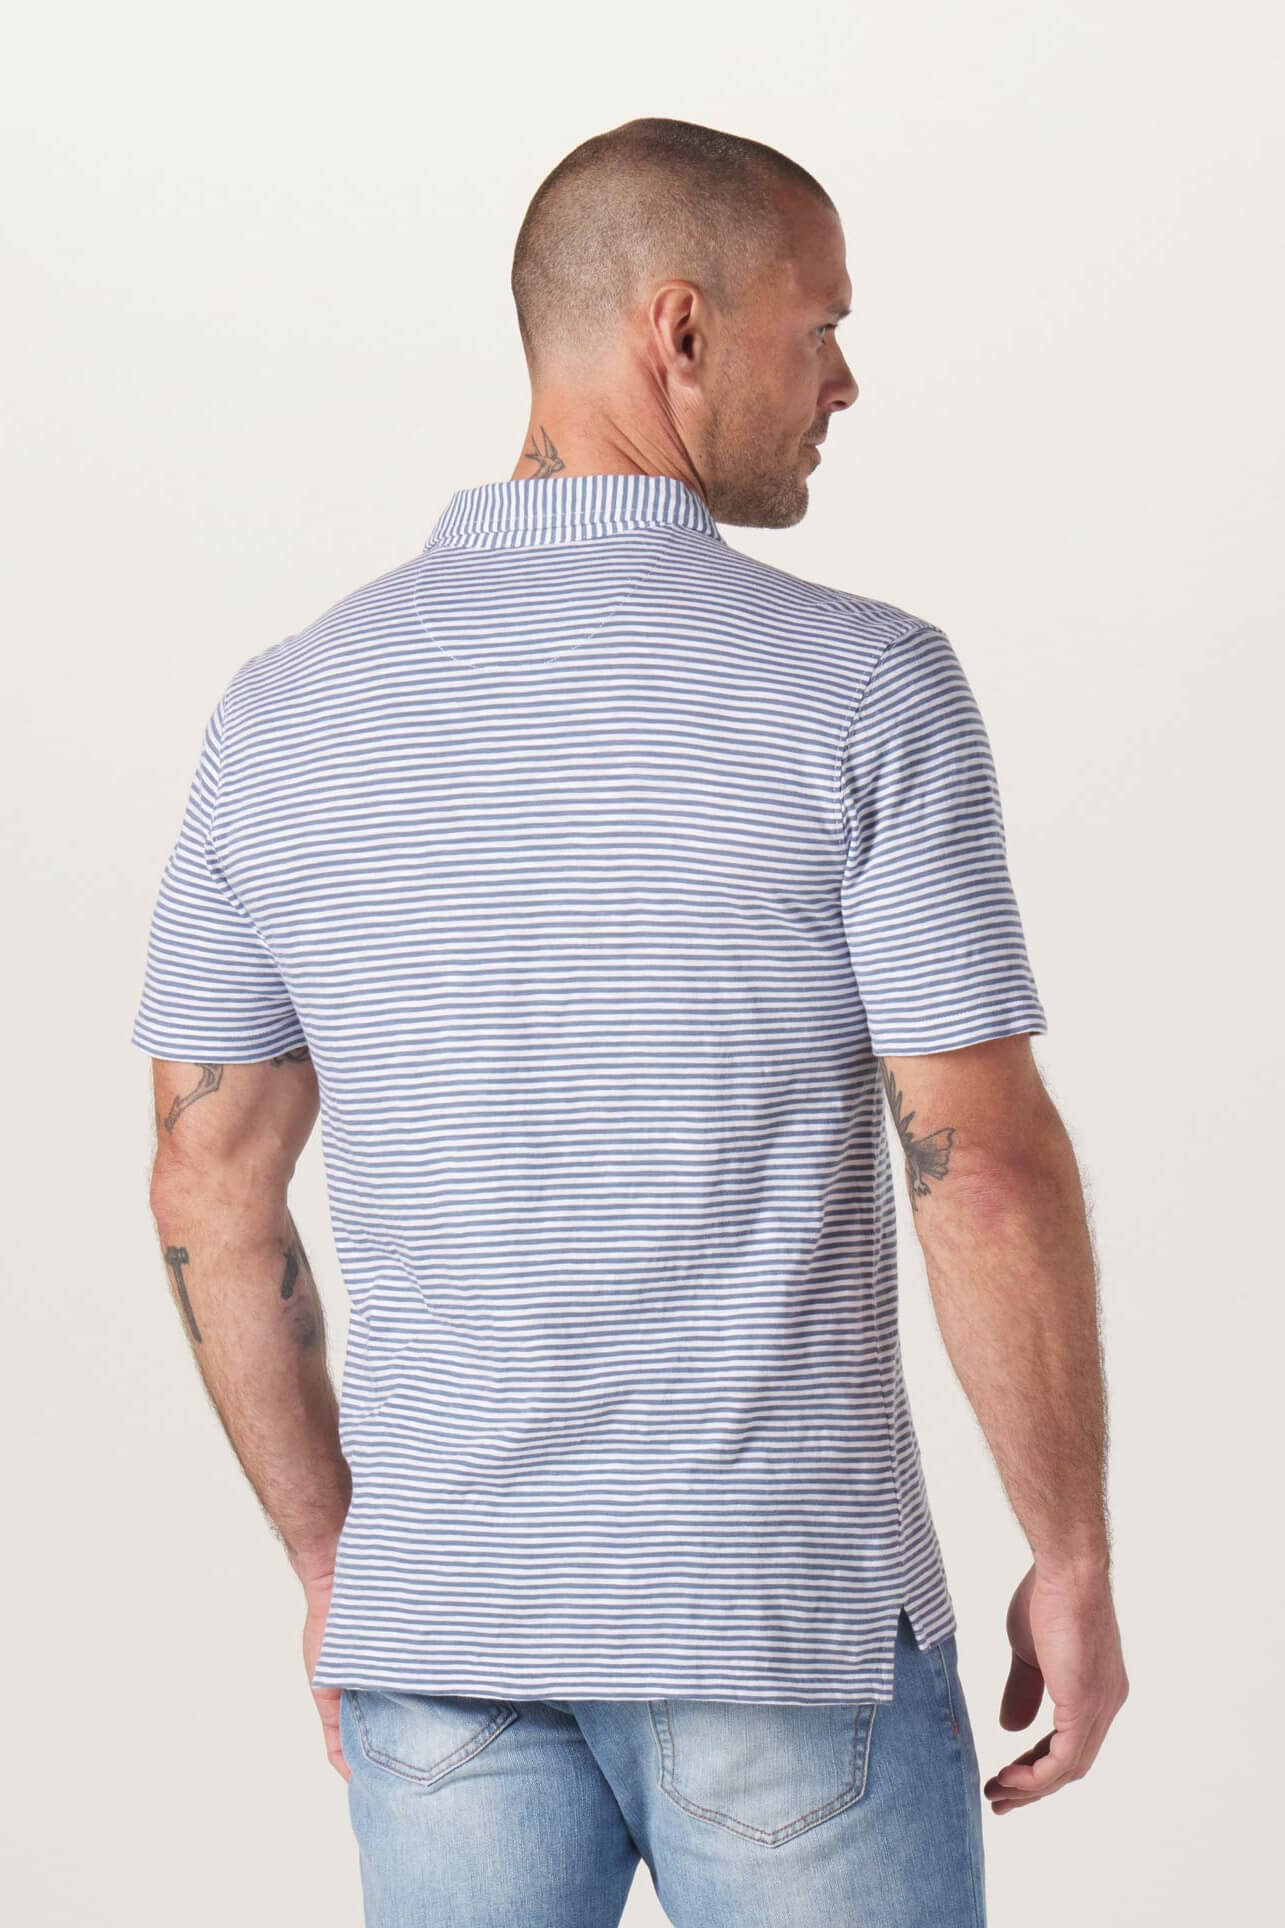 The Normal Brand vintage slub pocket pullover in blue stripe